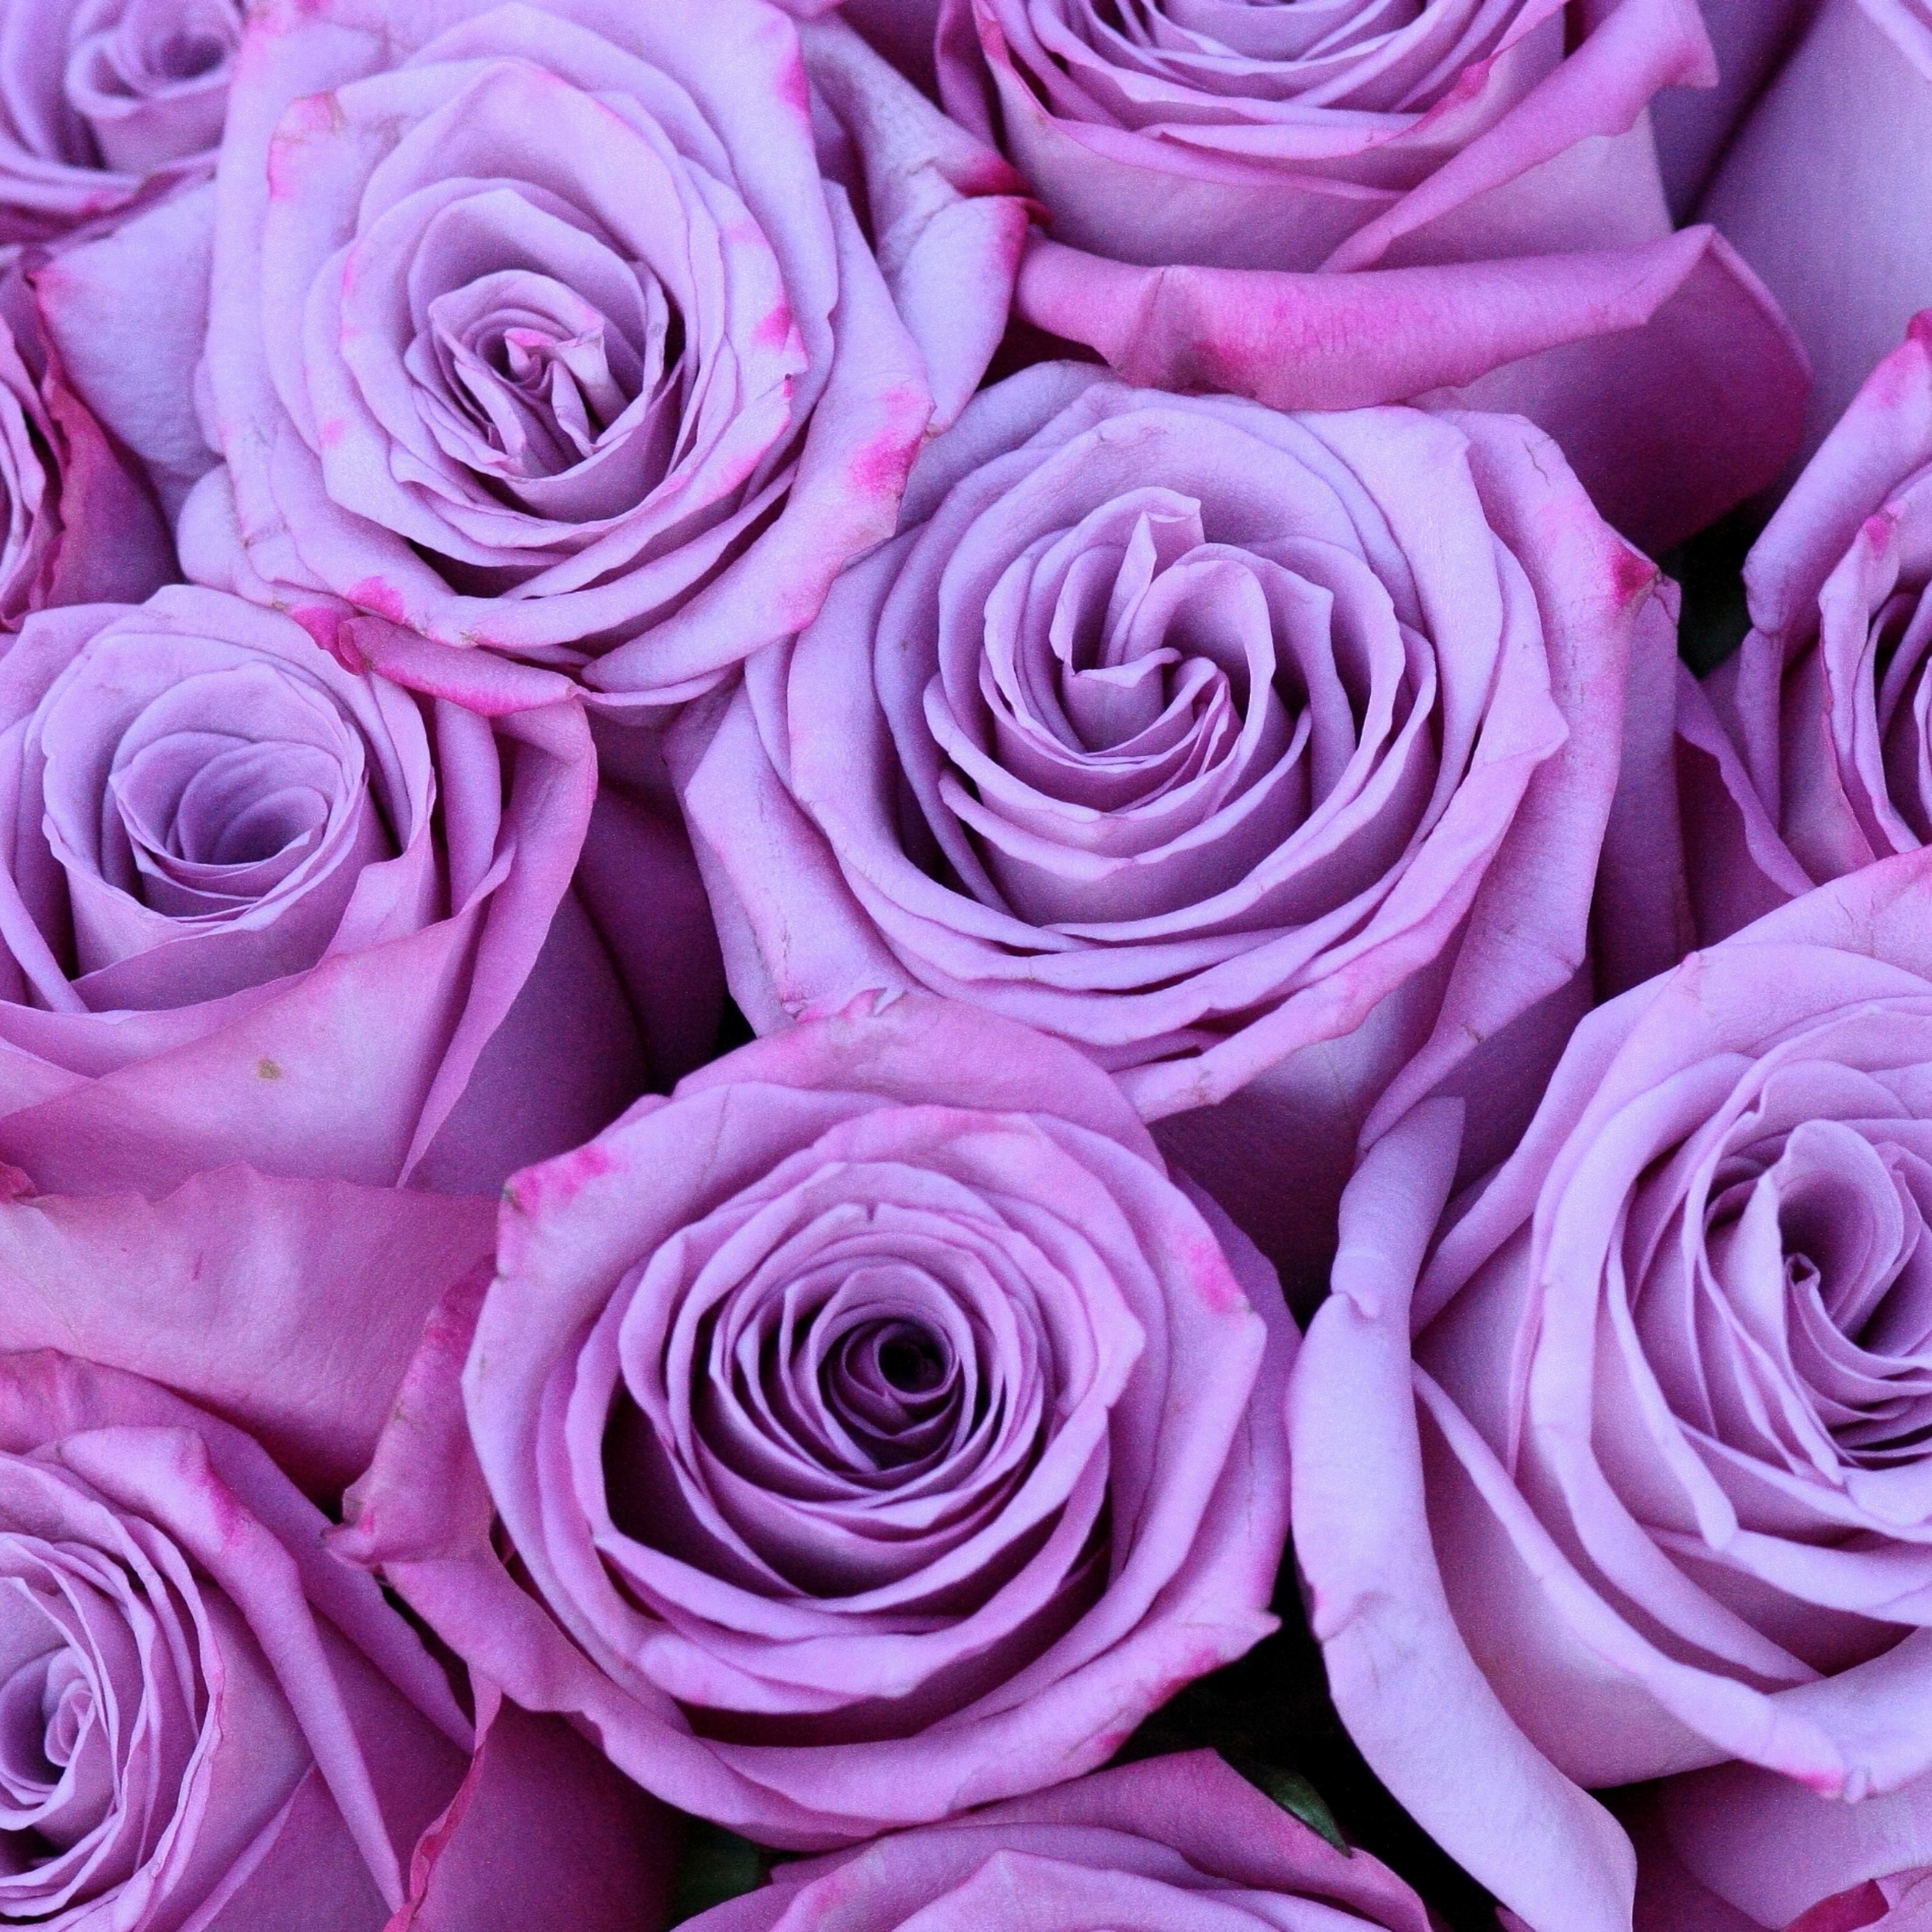 iPad Wallpapers Purple Roses Flowers Bouquet iPad Wallpaper 3208x3208 px